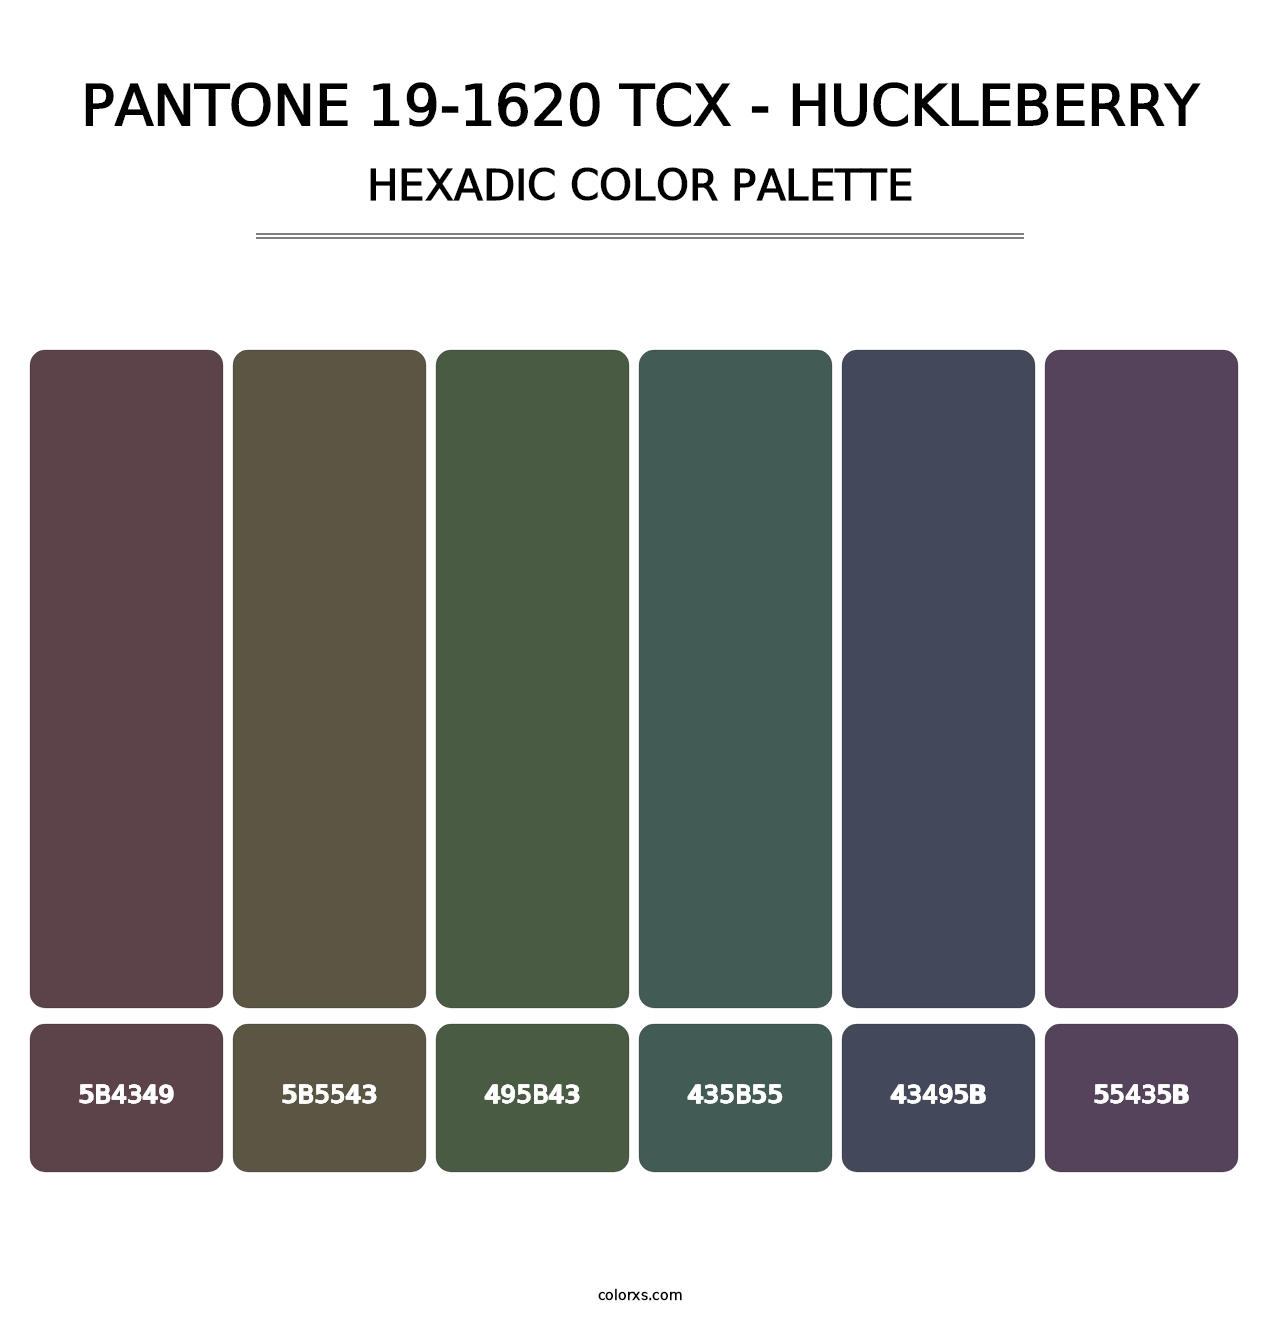 PANTONE 19-1620 TCX - Huckleberry - Hexadic Color Palette